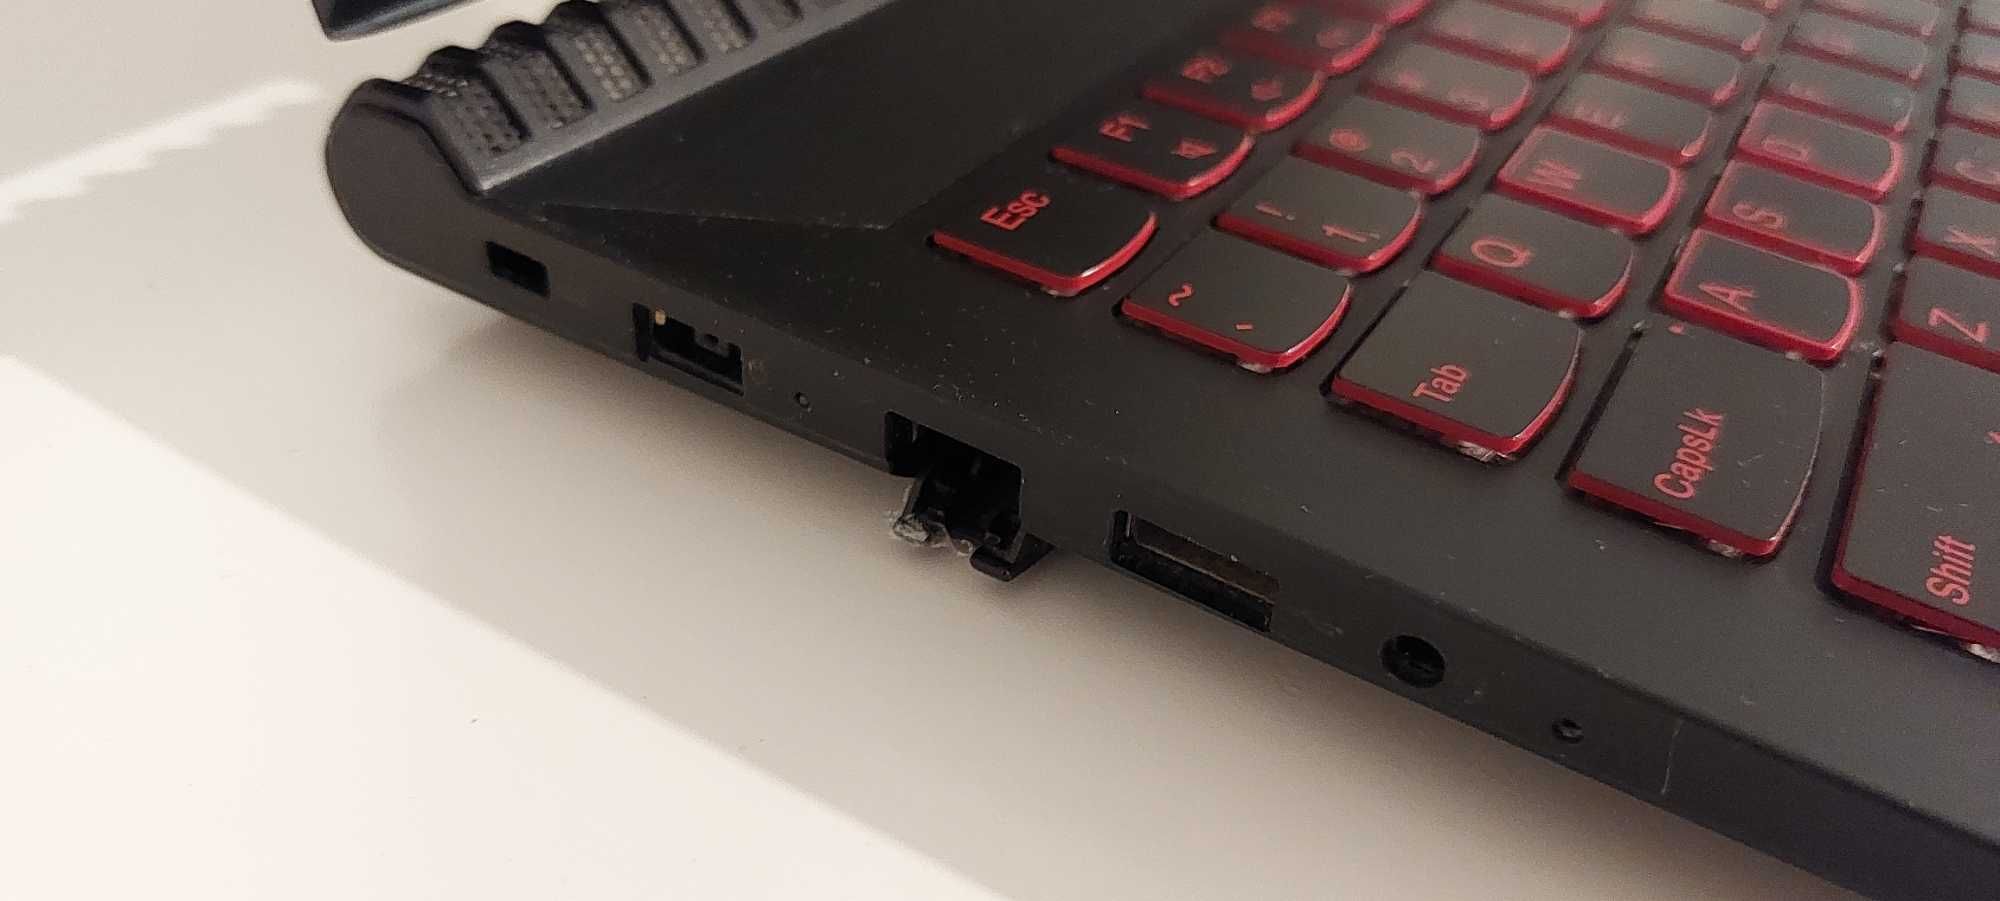 Laptop Lenovo Legion Y520-15 i7-7700HQ/32GB/480+1000GTX1050Ti defekty